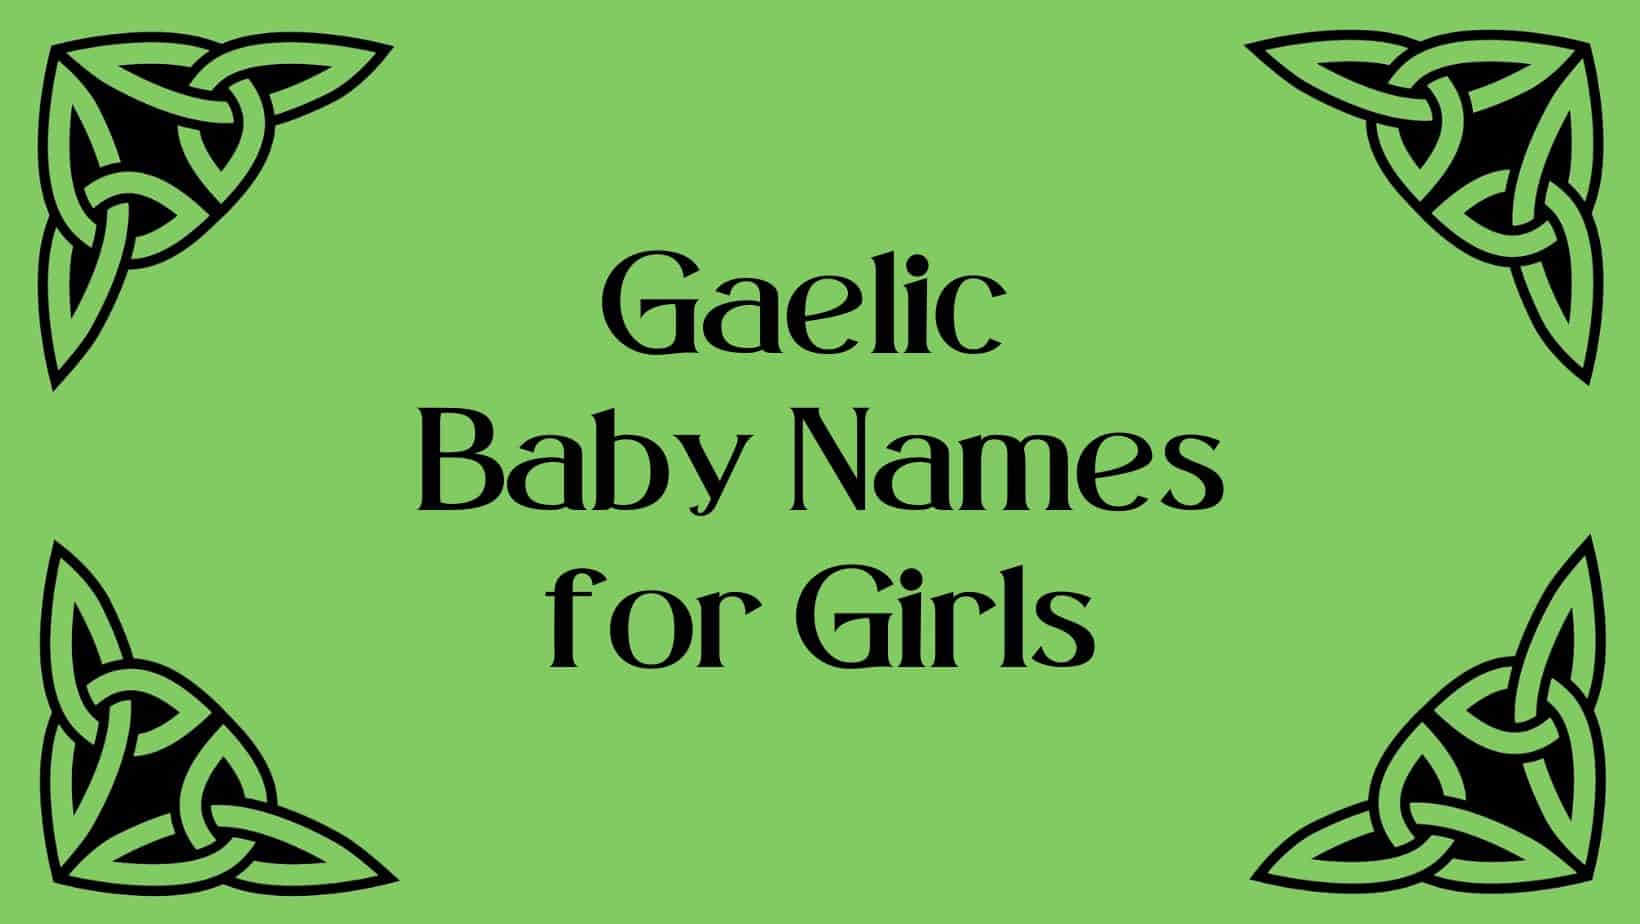 Gaelic Baby Names for girls